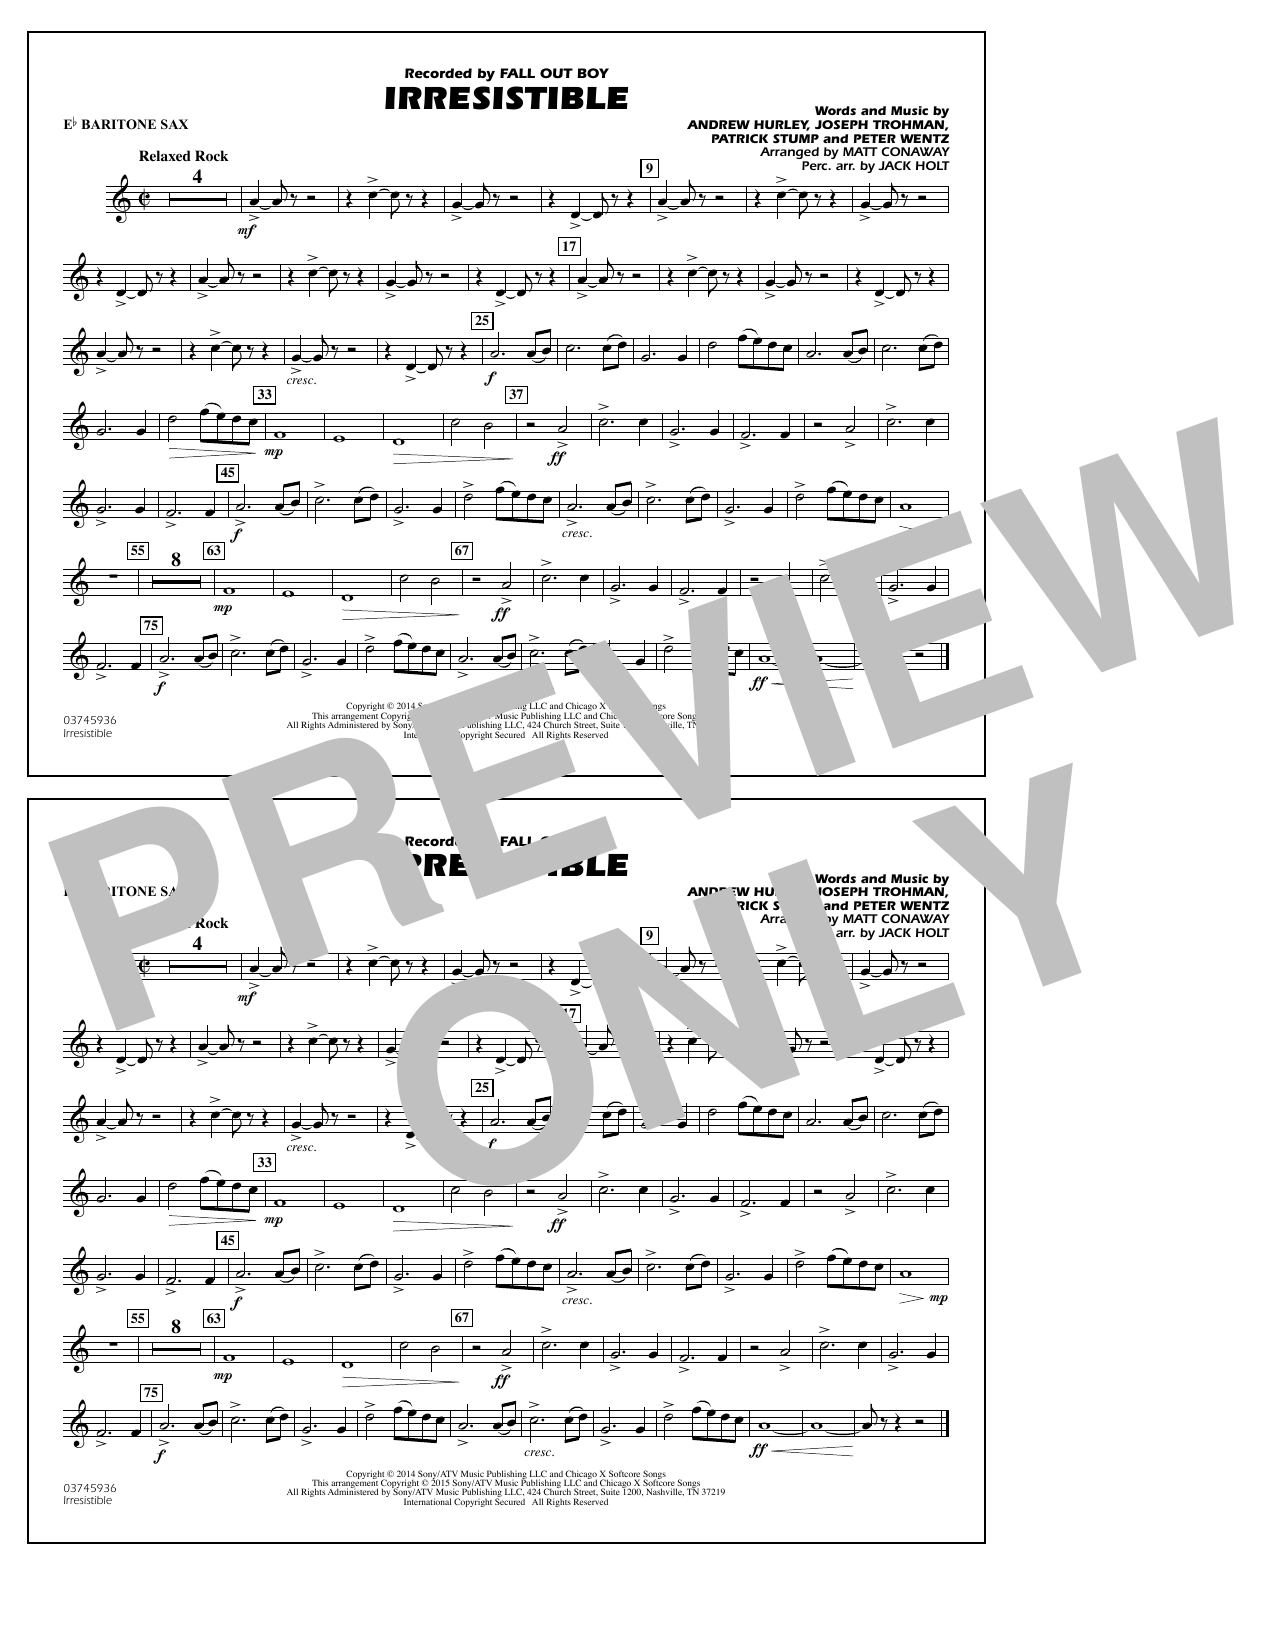 Matt Conaway Irresistible - Eb Baritone Sax Sheet Music Notes & Chords for Marching Band - Download or Print PDF